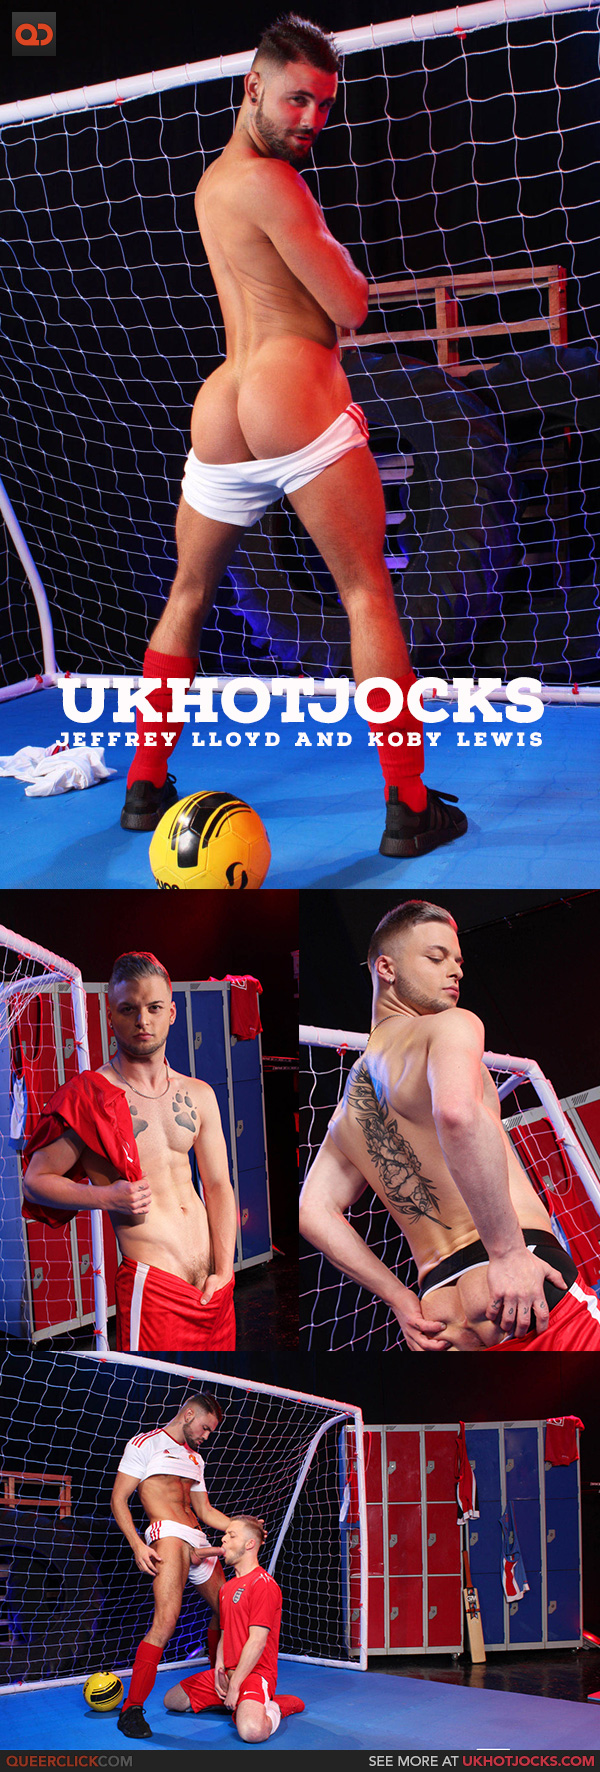 UK Hot Jocks: Jeffrey Lloyd and Koby Lewis